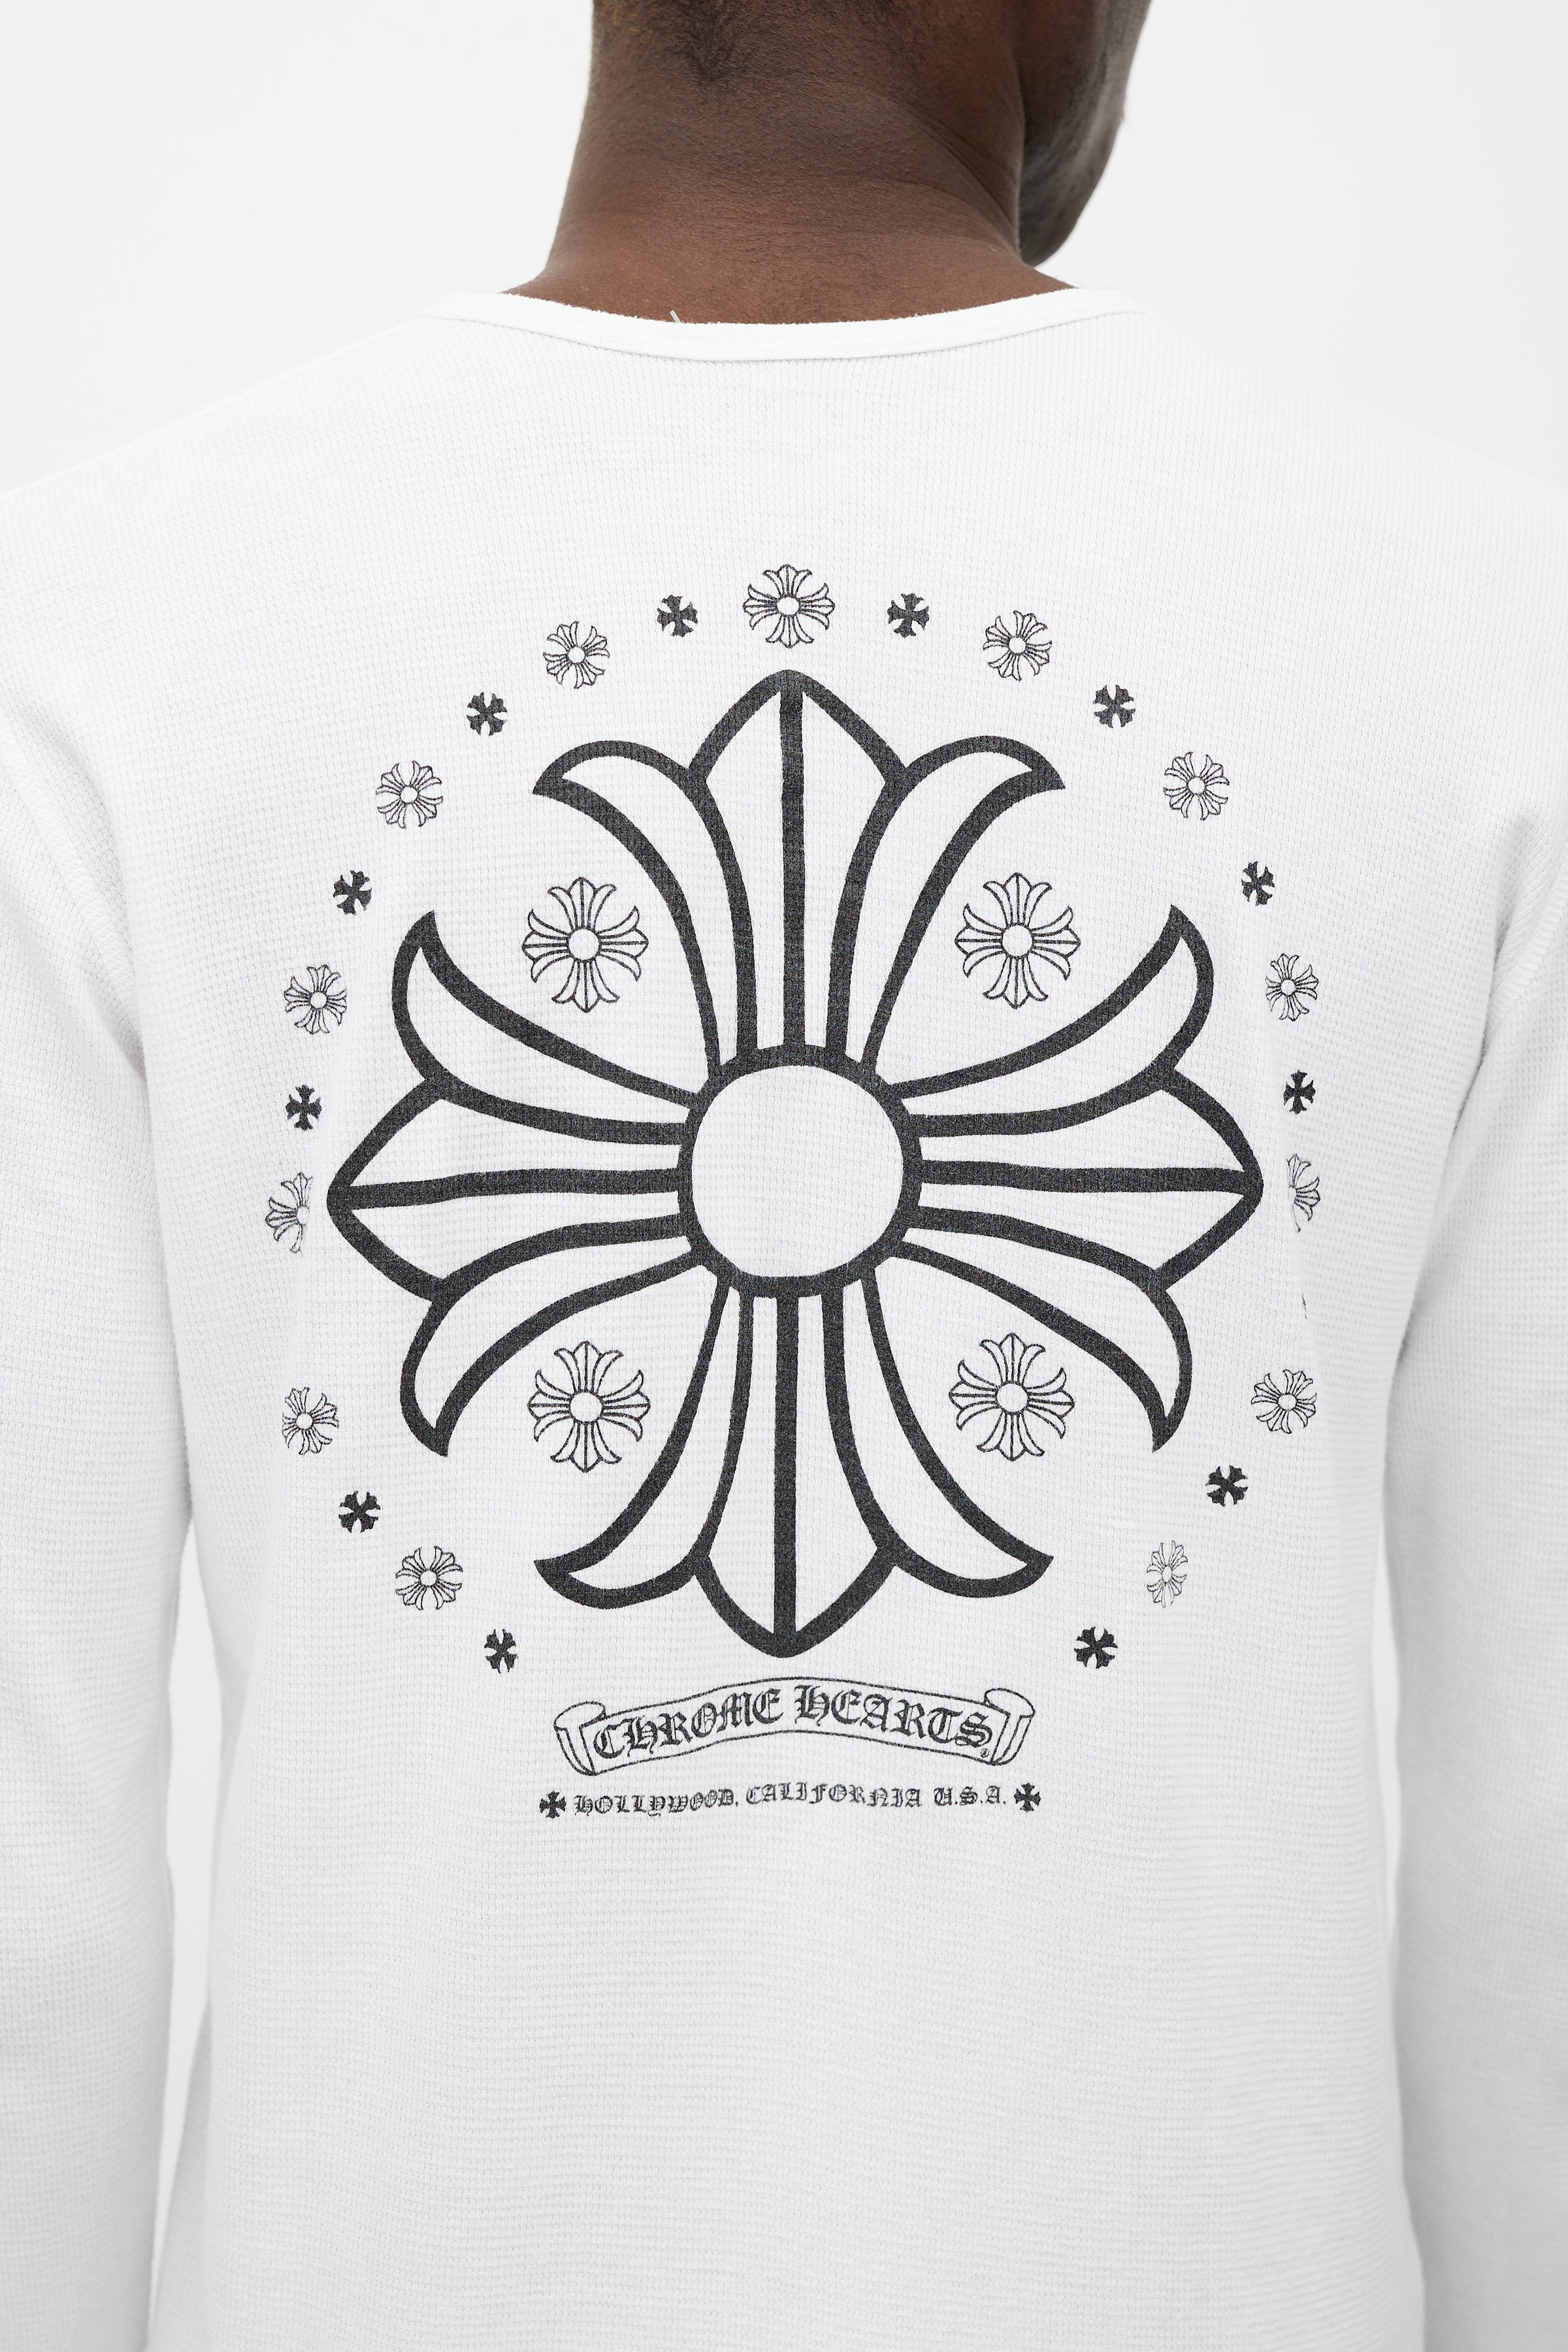 Chrome Hearts // White Logo Long Sleeve Thermal T-Shirt – VSP